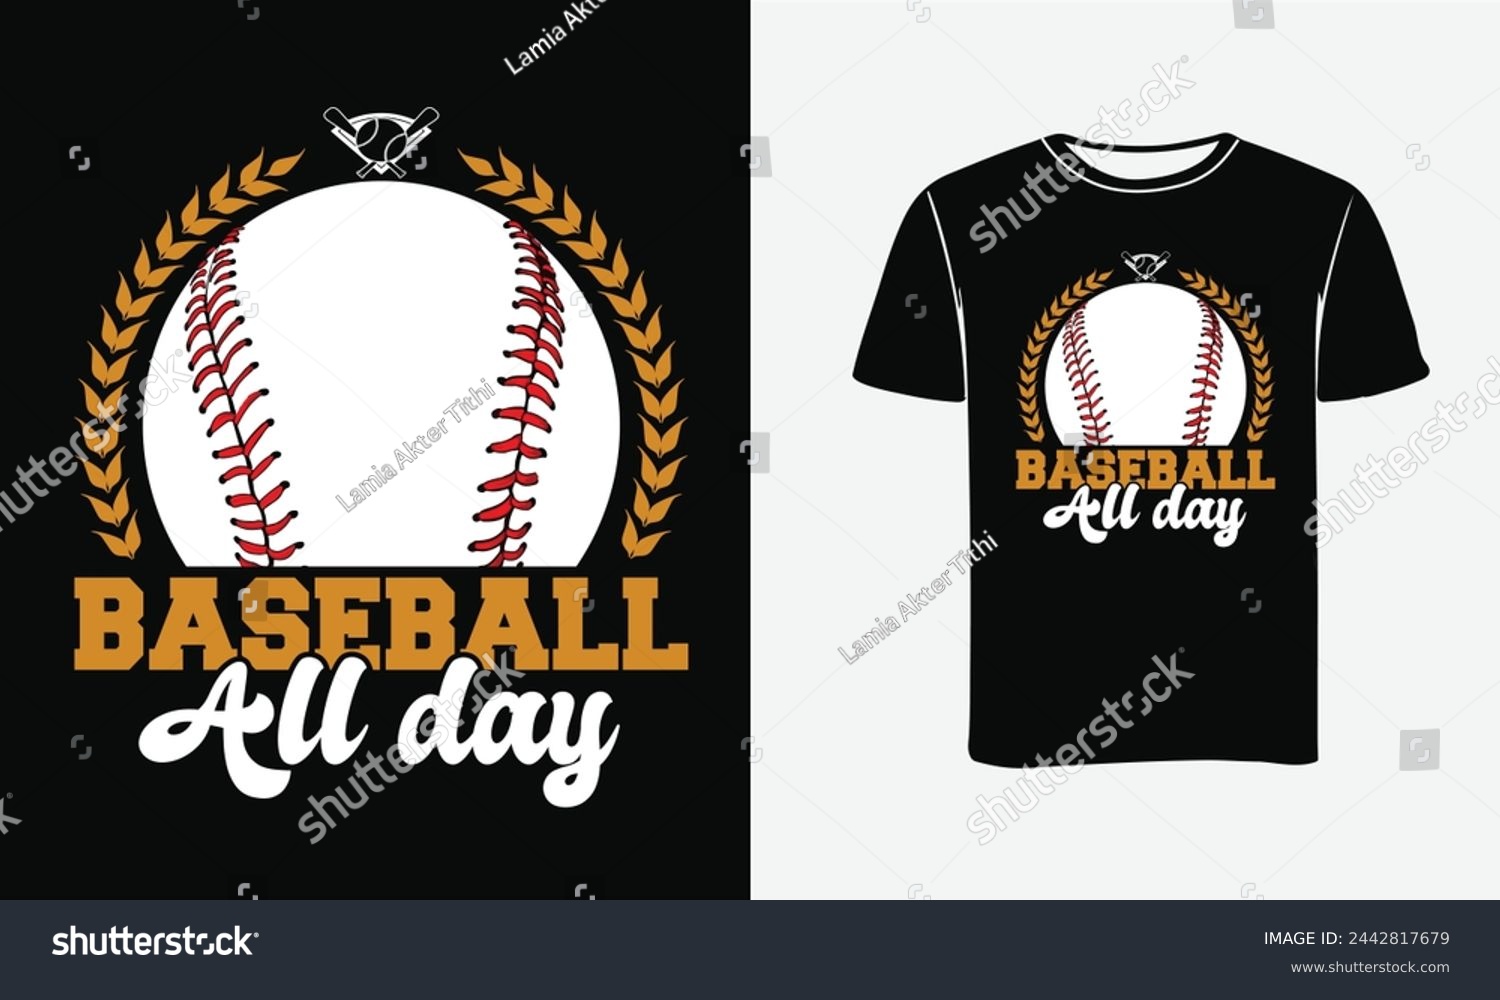 SVG of Baseball Custom Vector Art . Baseball All Day T-shirt or Sticker Designs and Baseball Illustration . Print , Poster svg